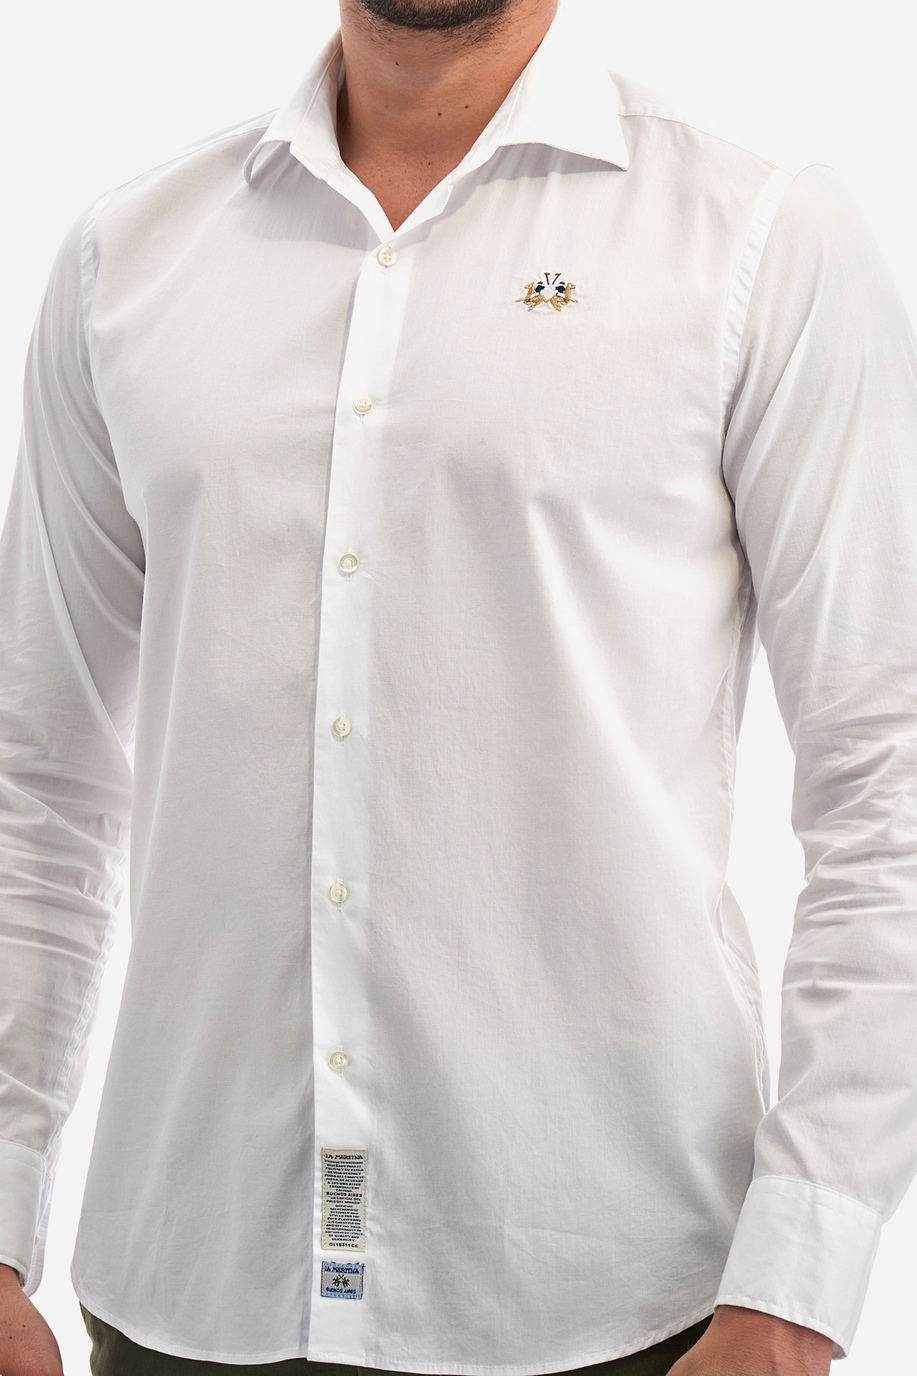 Men’s slim fit shirt small logo - Innocent - Party season for him | La Martina - Official Online Shop